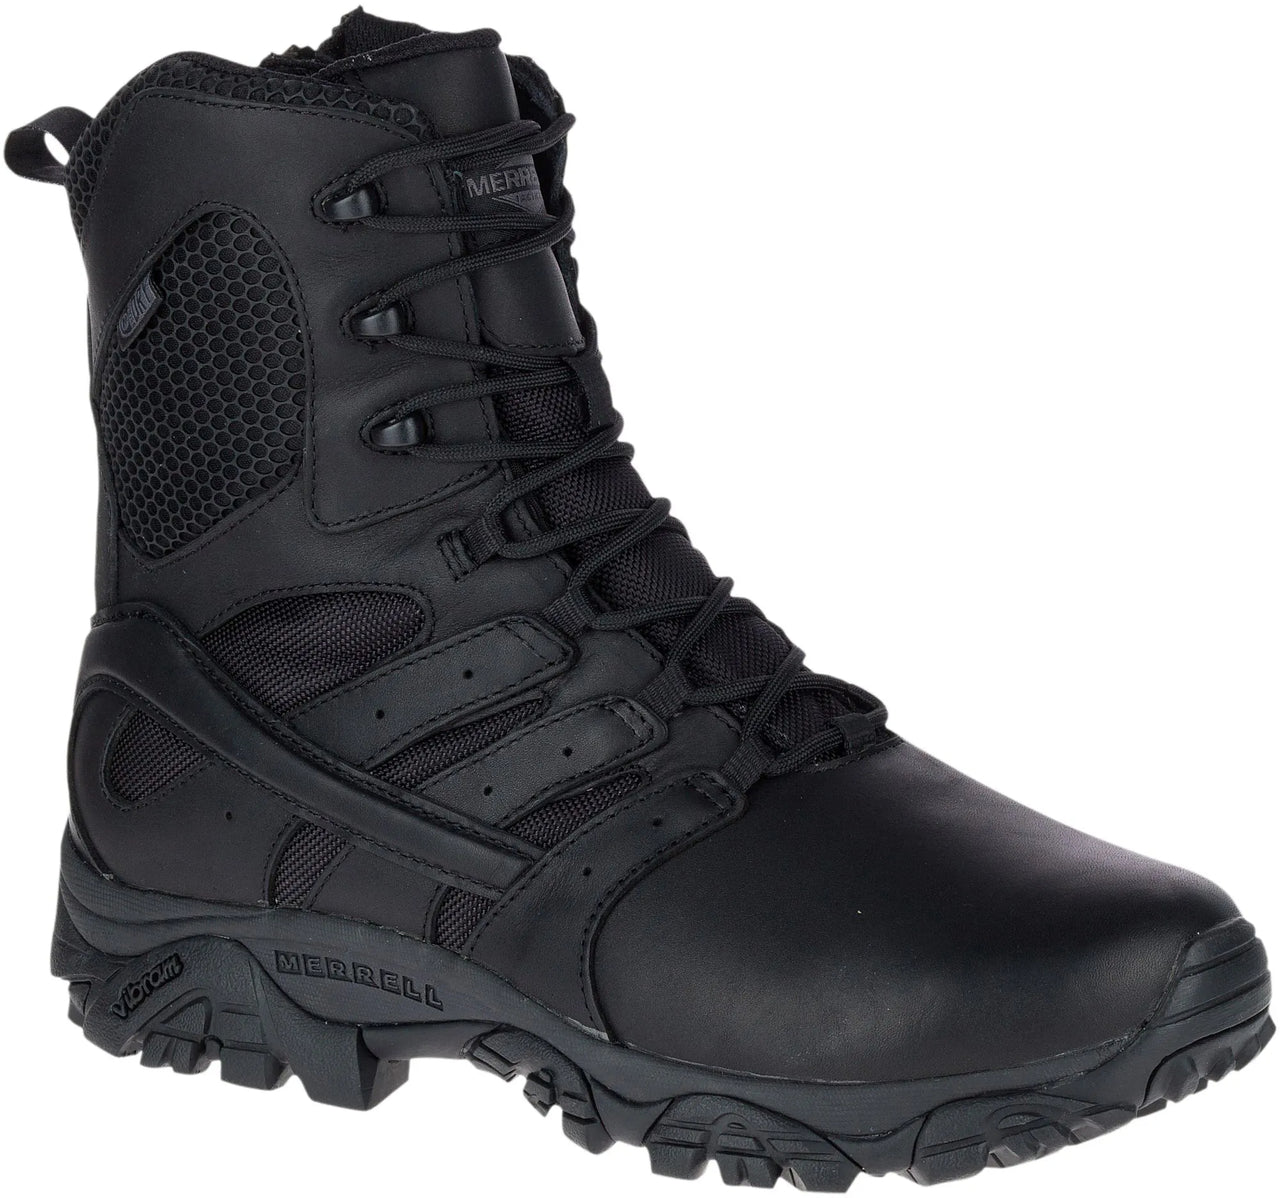 Moab 2 Tactical Response Men's Tactical Boots - Wide